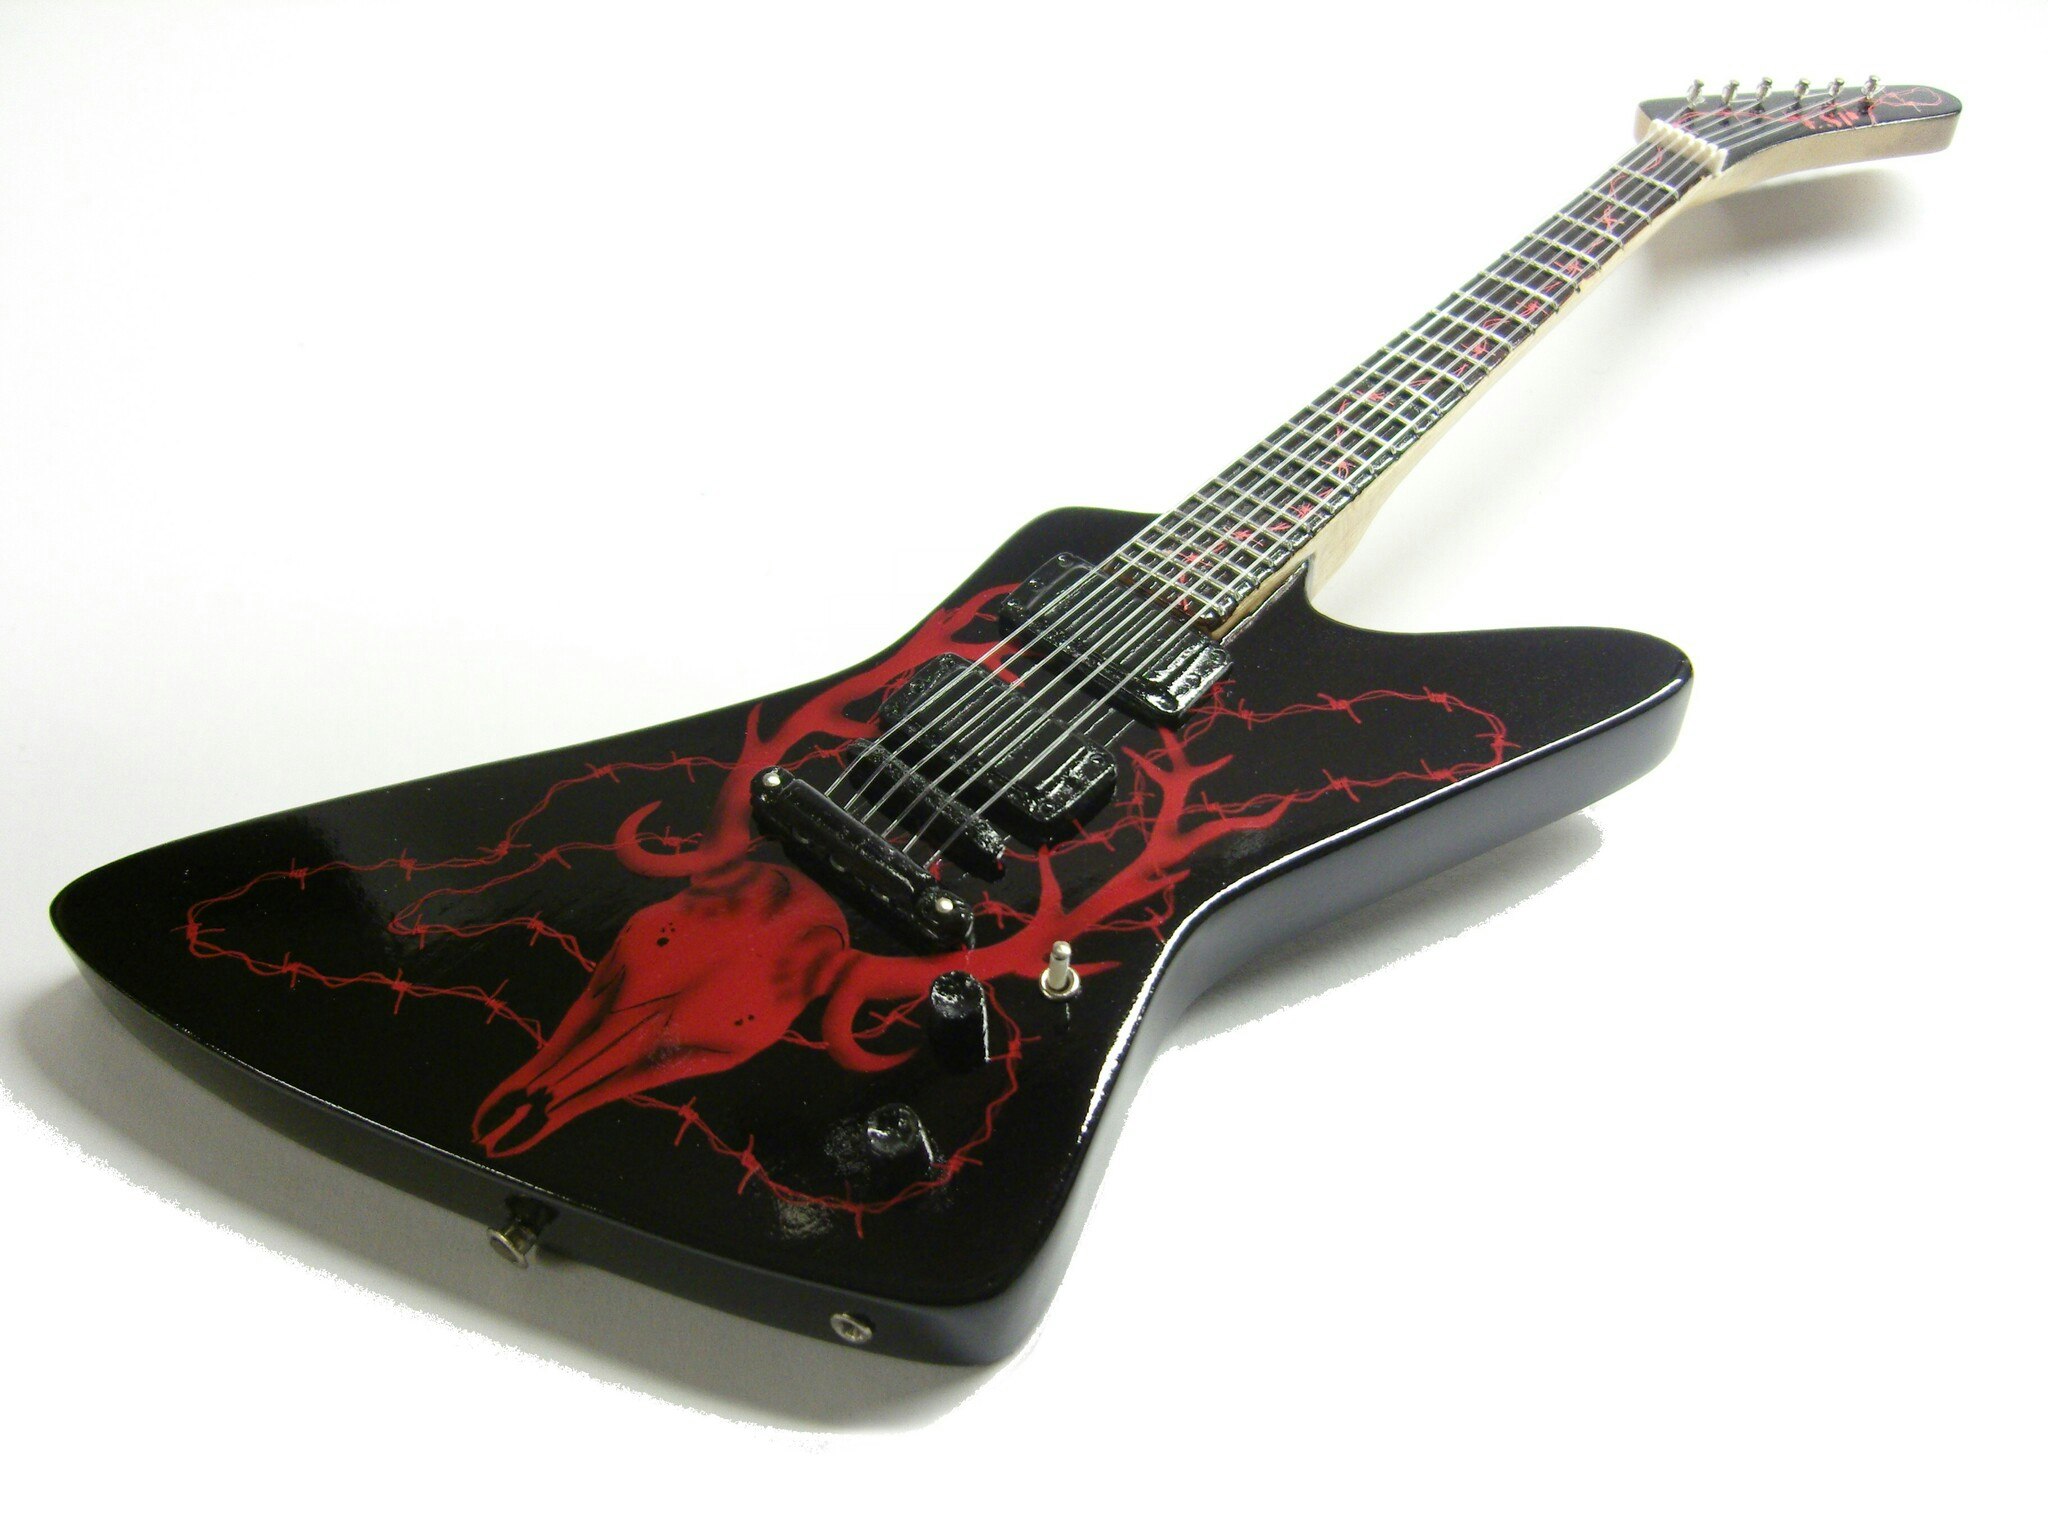 James Hetfield guitar replica.